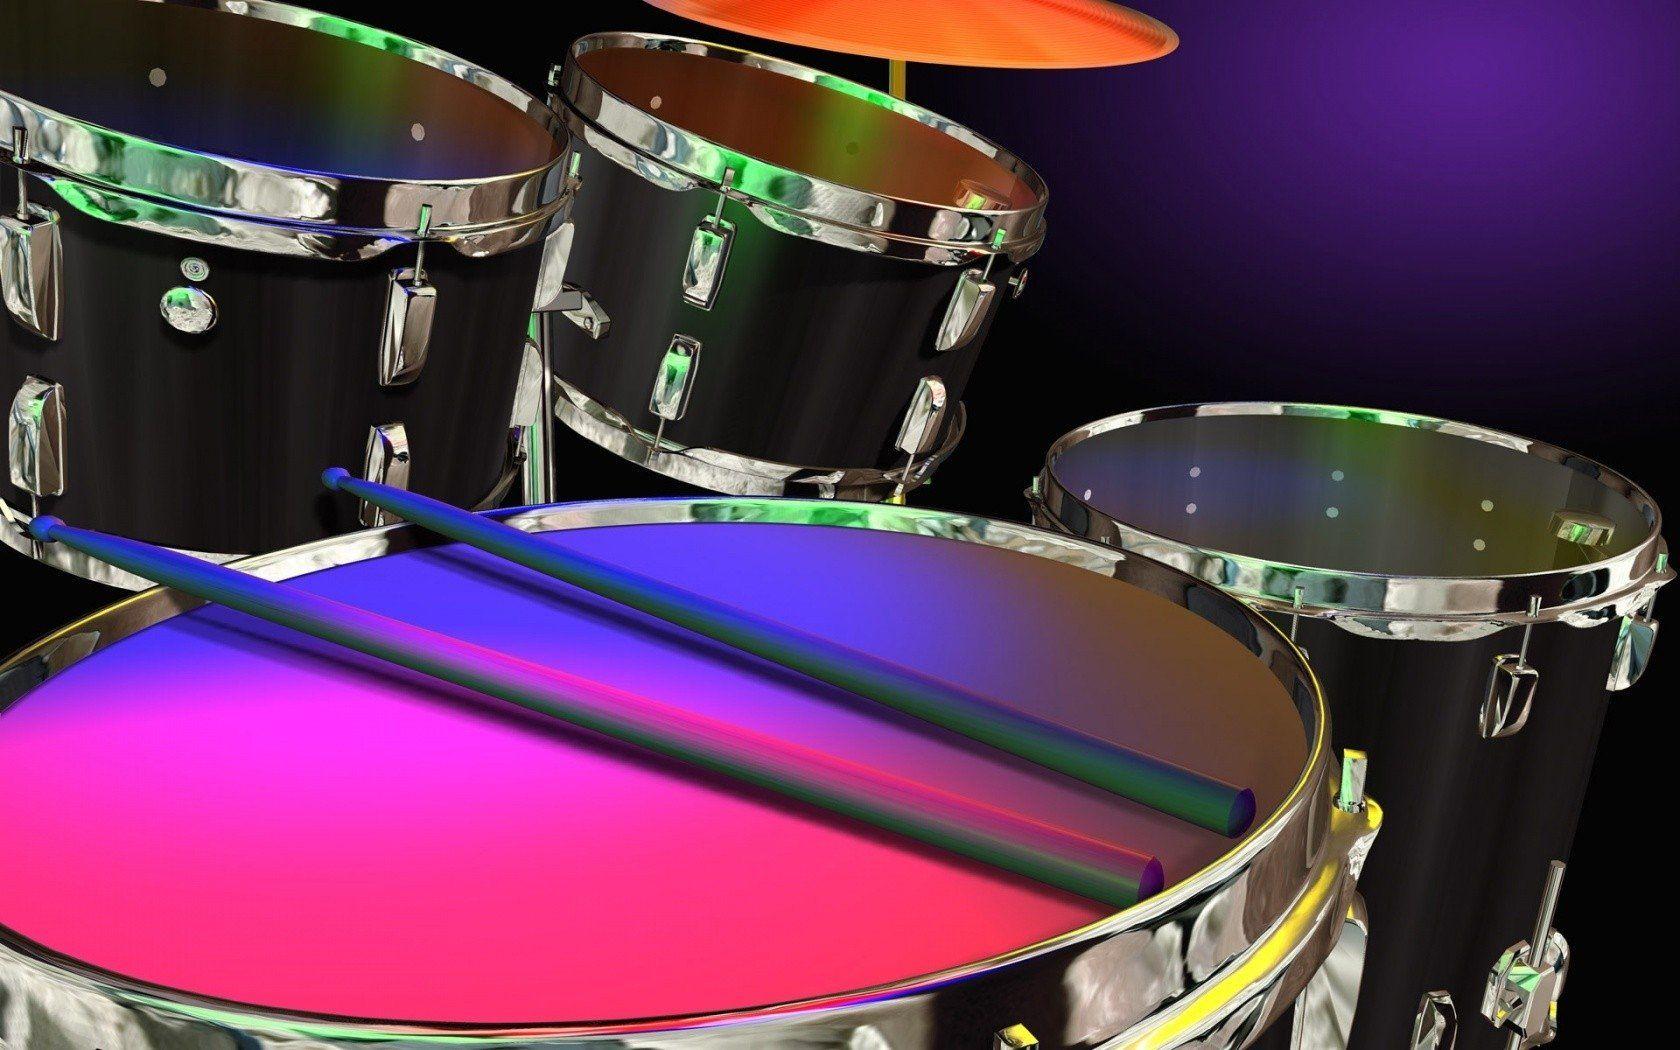 Drums HD Wallpaper